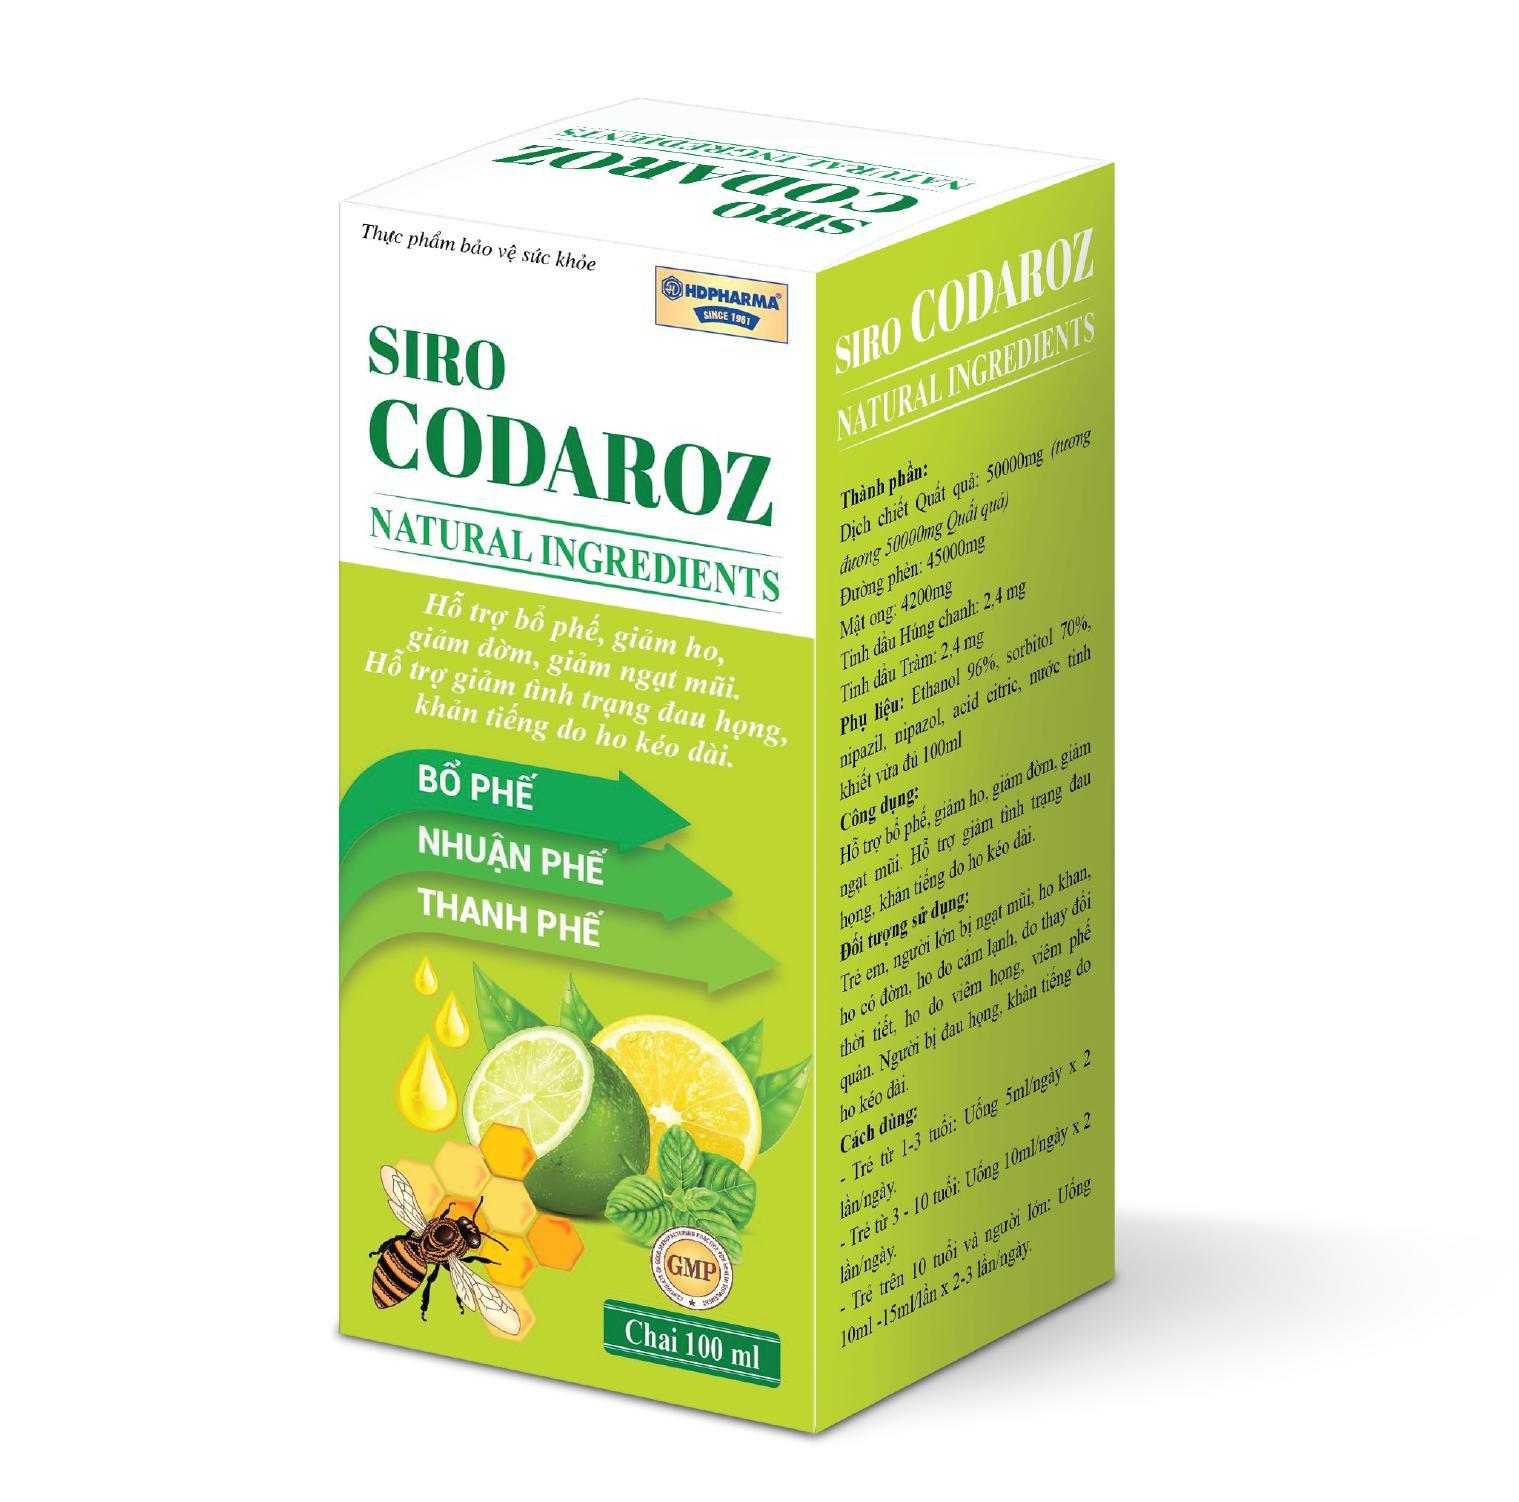 Siro Codaroz Natural Ingredients HD Pharma (C/100ml)